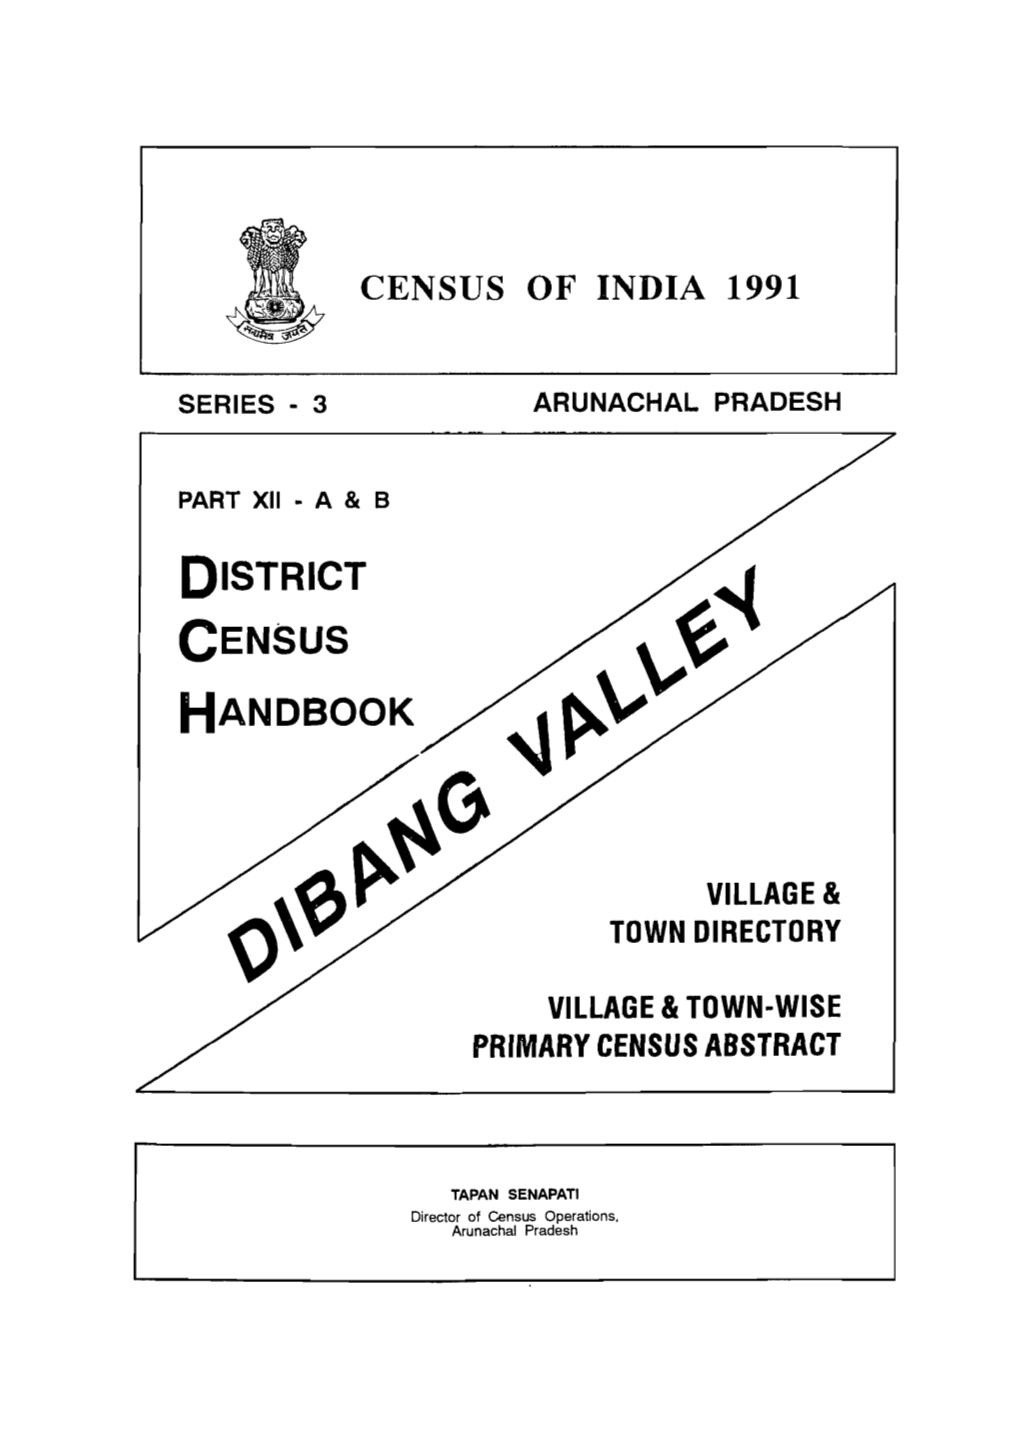 District Census Handbook, Dibang Valley, Part XII a & B, Series-3